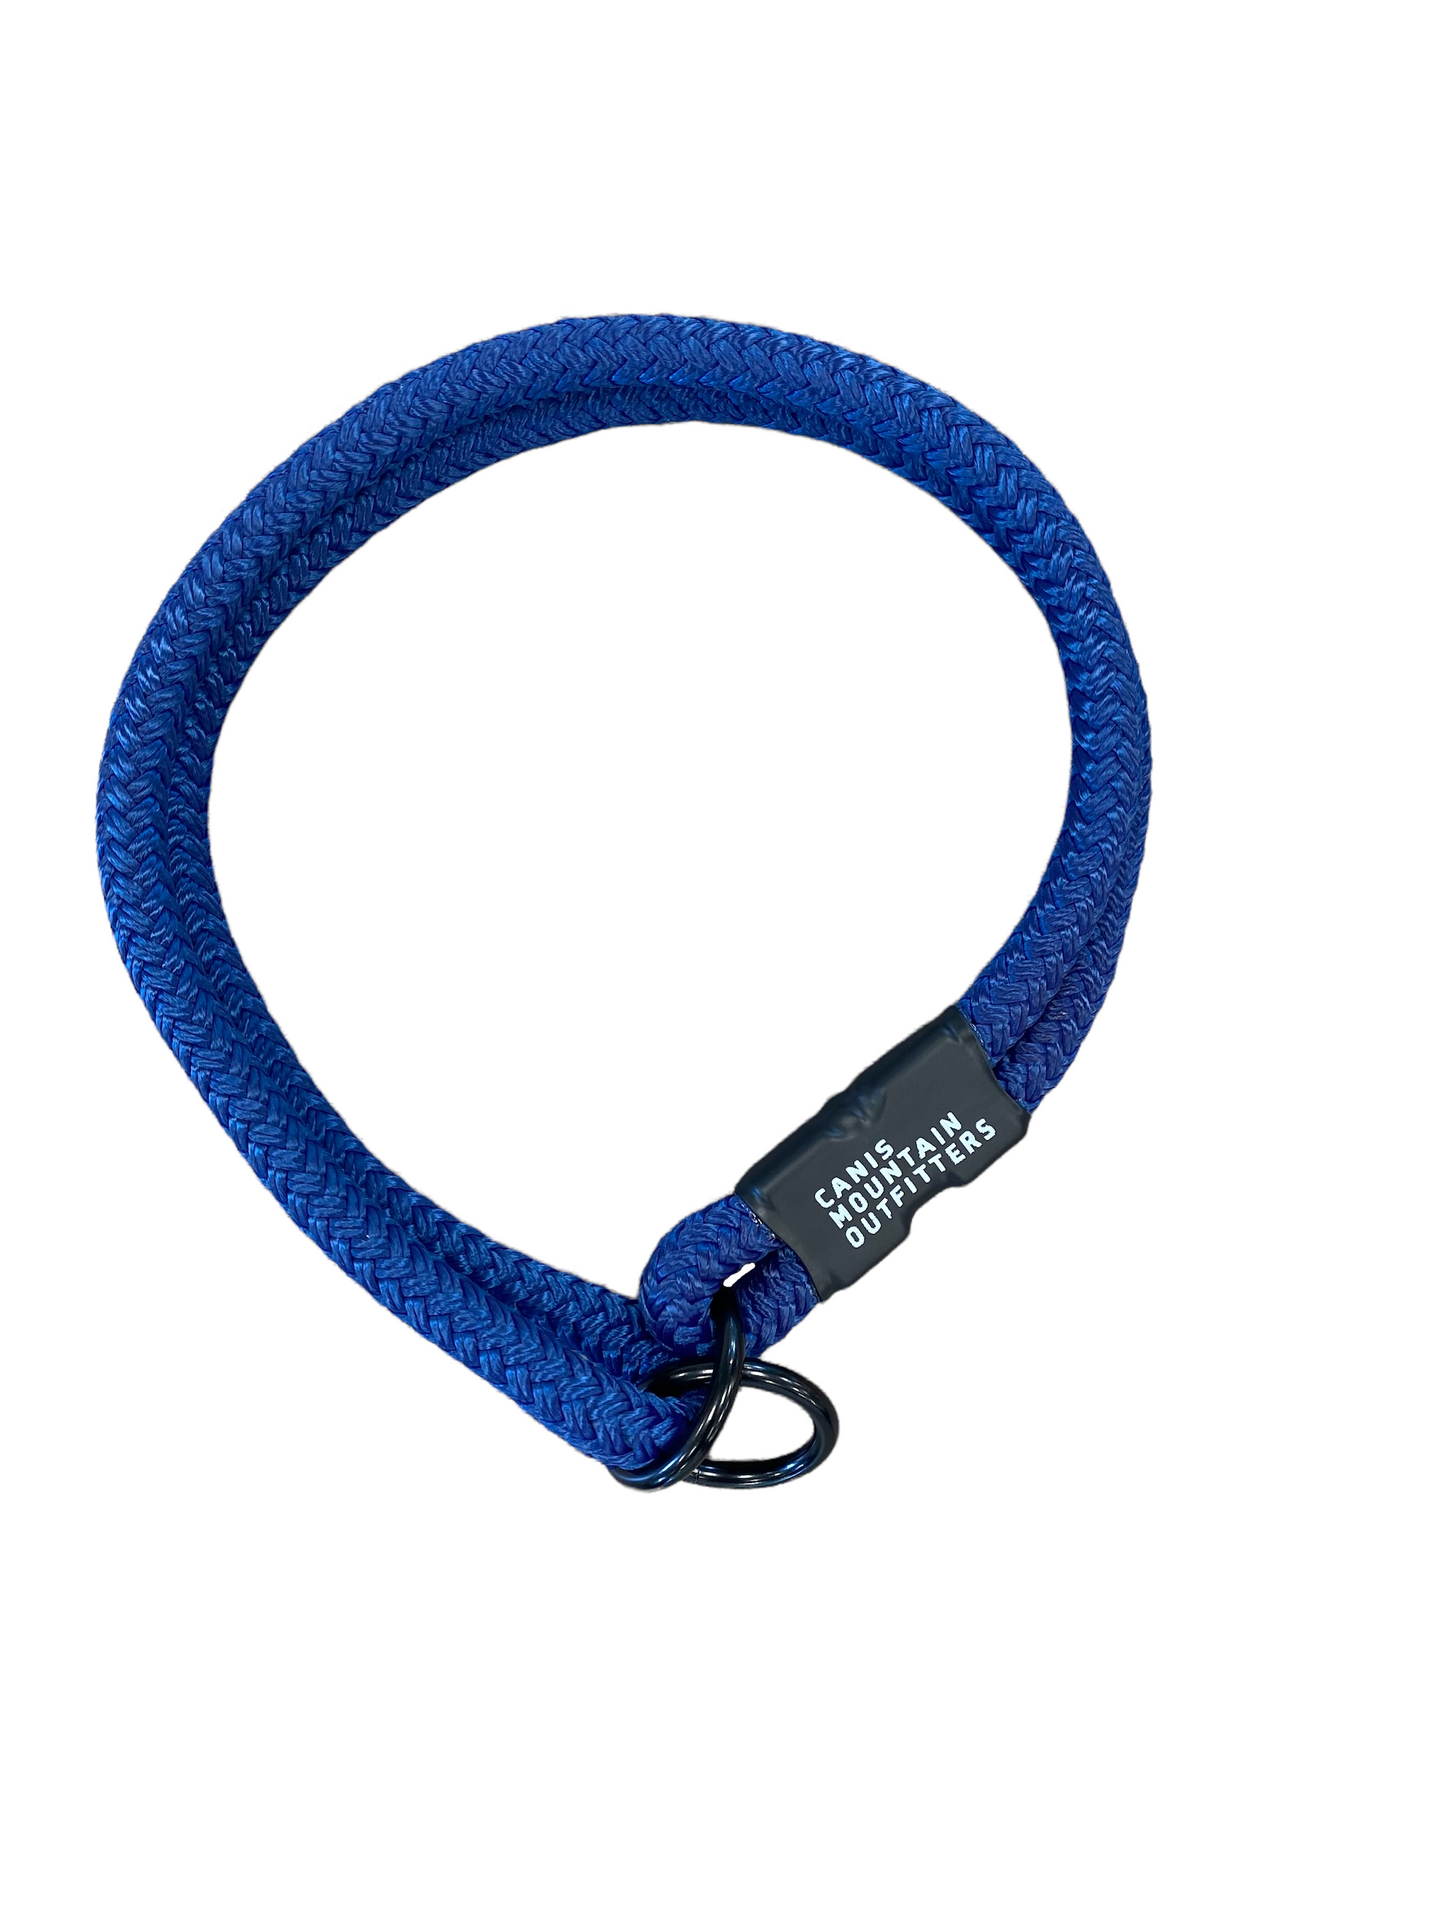 Slip Collar - Soft Series - Blue 9.5mm